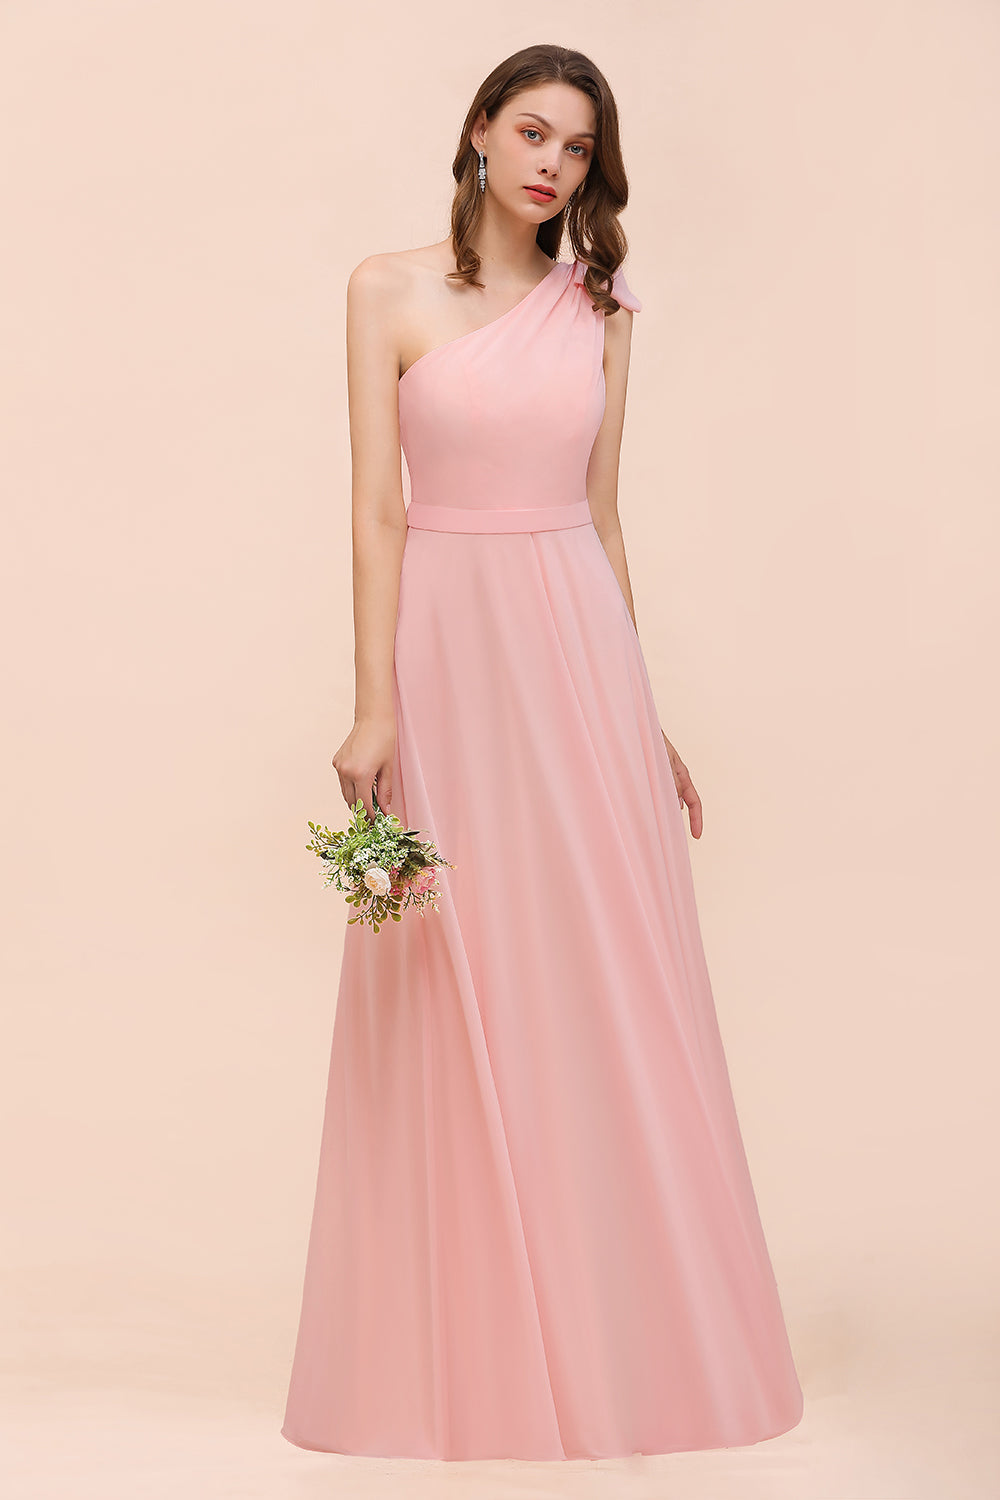 Chic One Shoulder Sleeveless Pink Chiffon Bridesmaid Dress with Bow-27dress